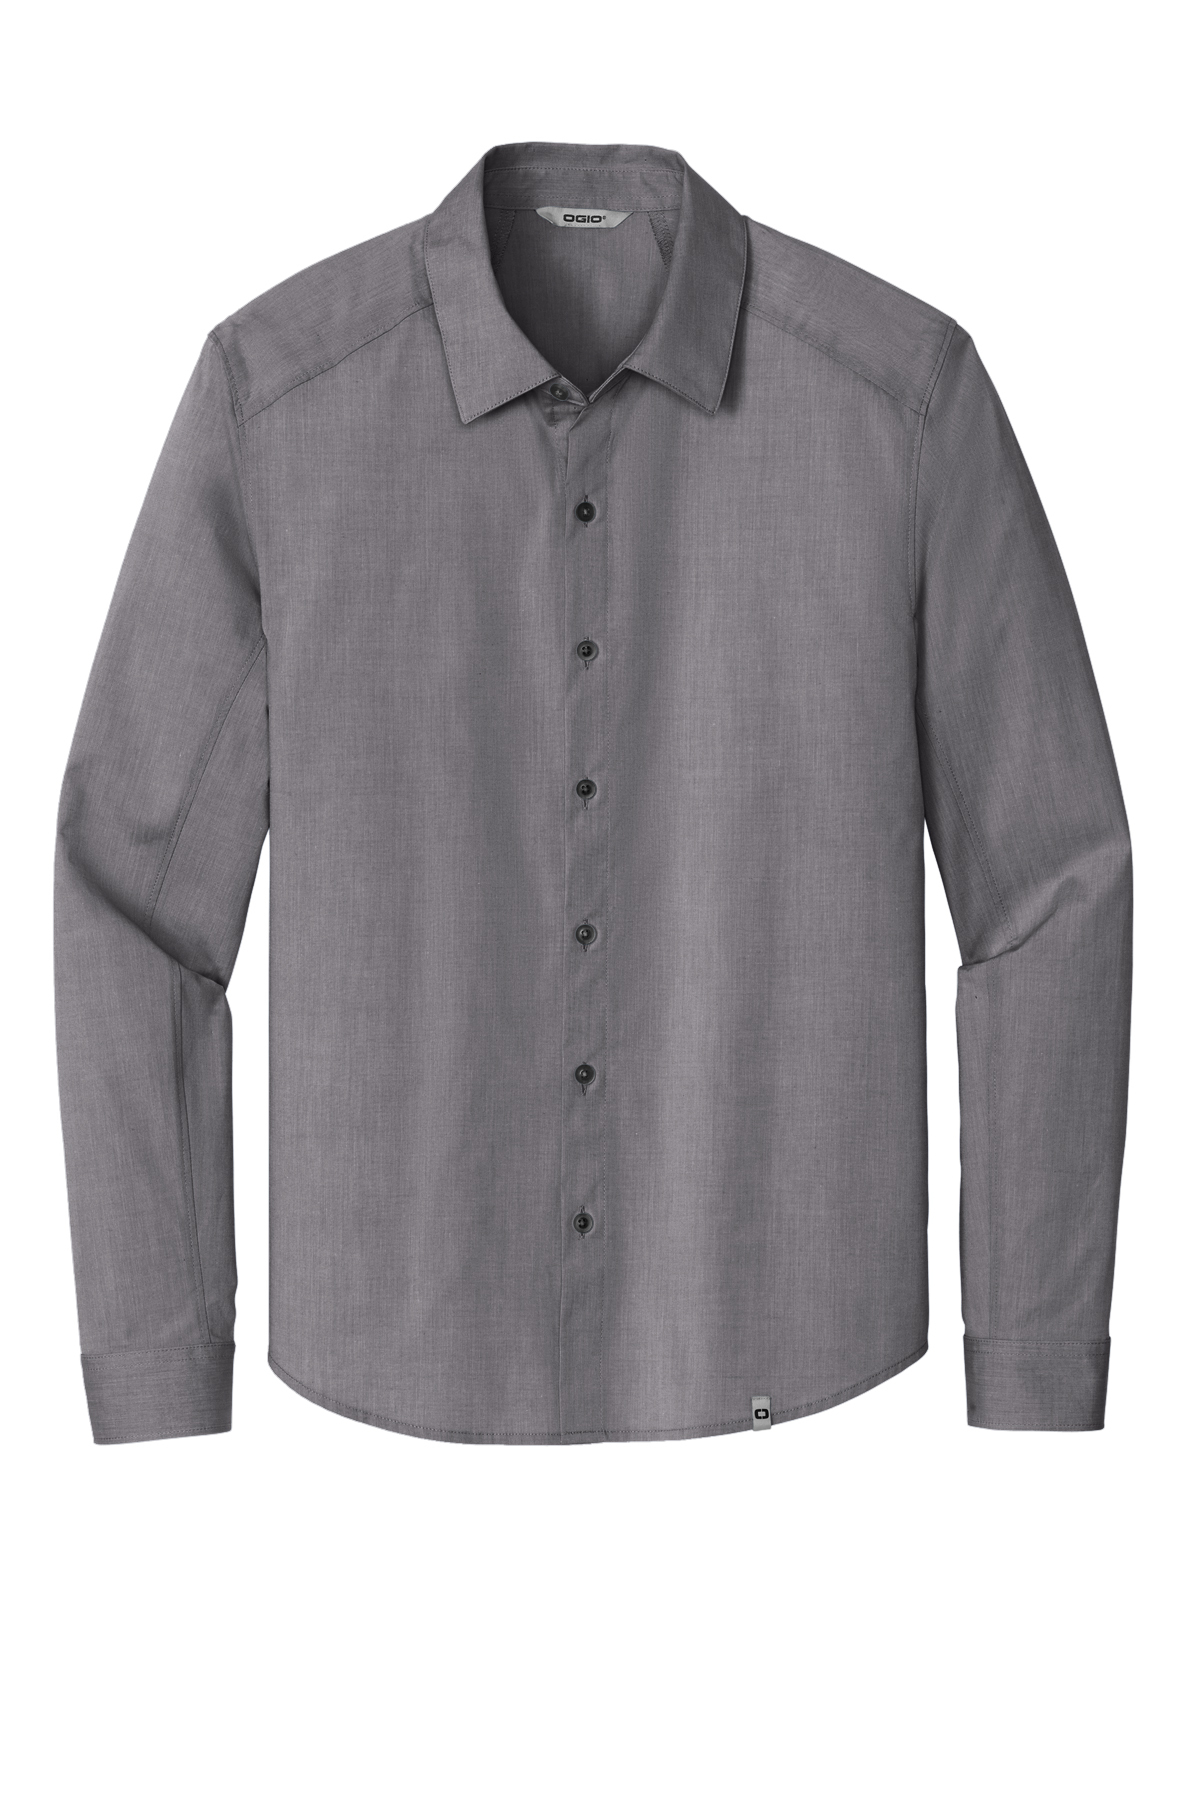 OGIO Commuter Woven Shirt | Product | SanMar